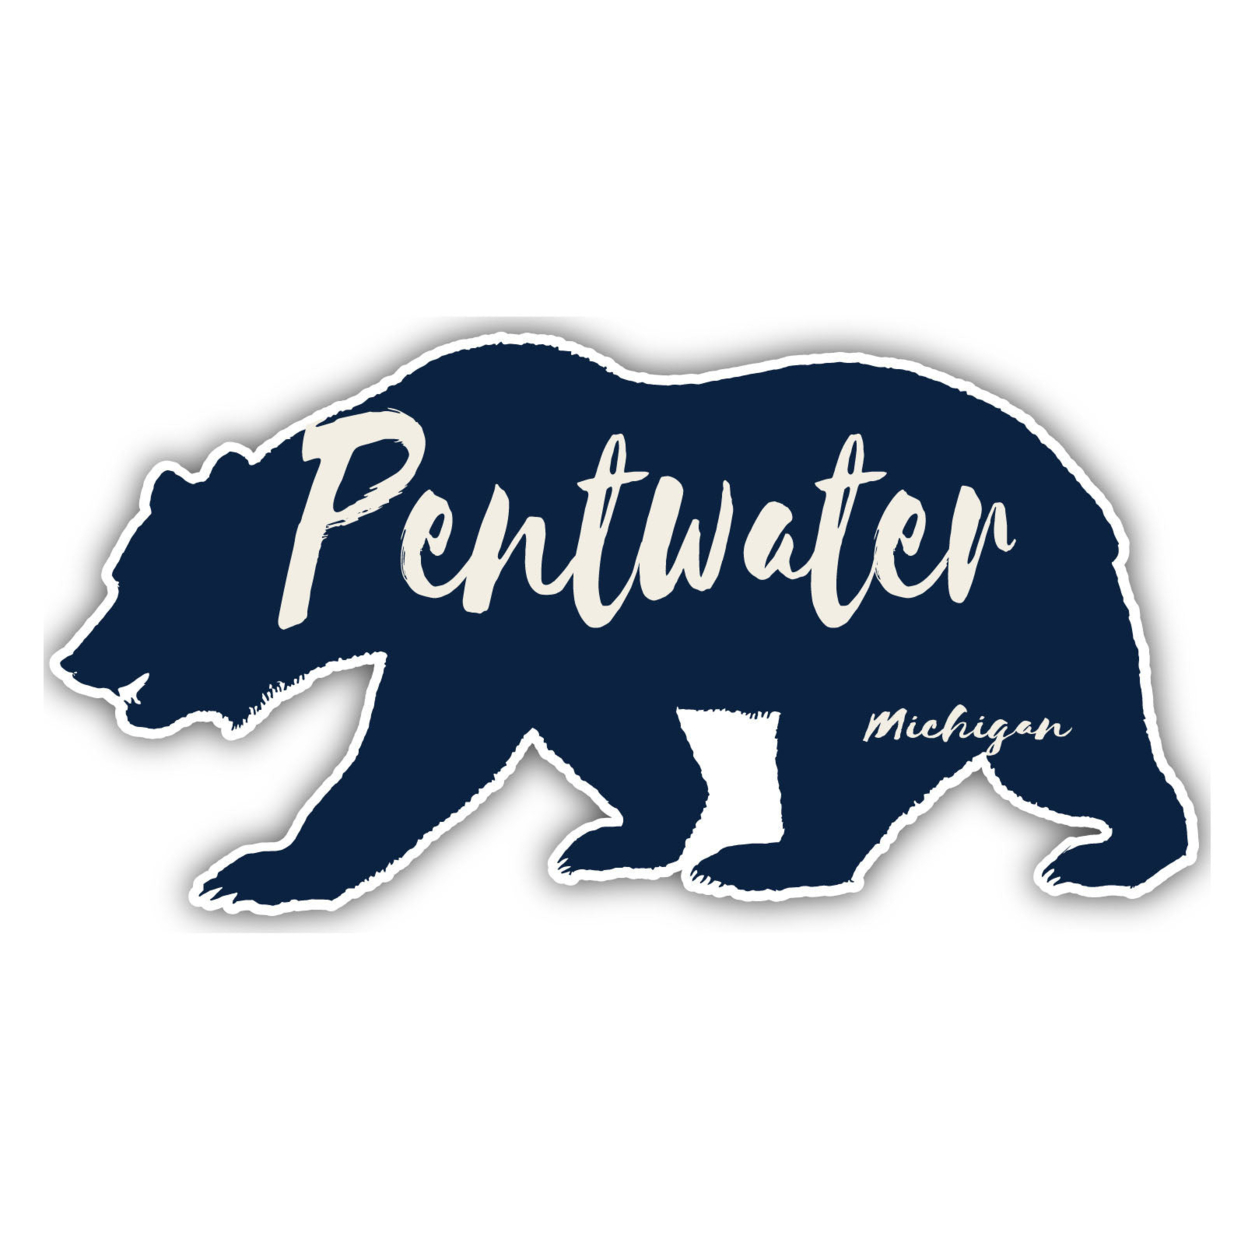 Pentwater Michigan Souvenir Decorative Stickers (Choose Theme And Size) - Single Unit, 4-Inch, Tent